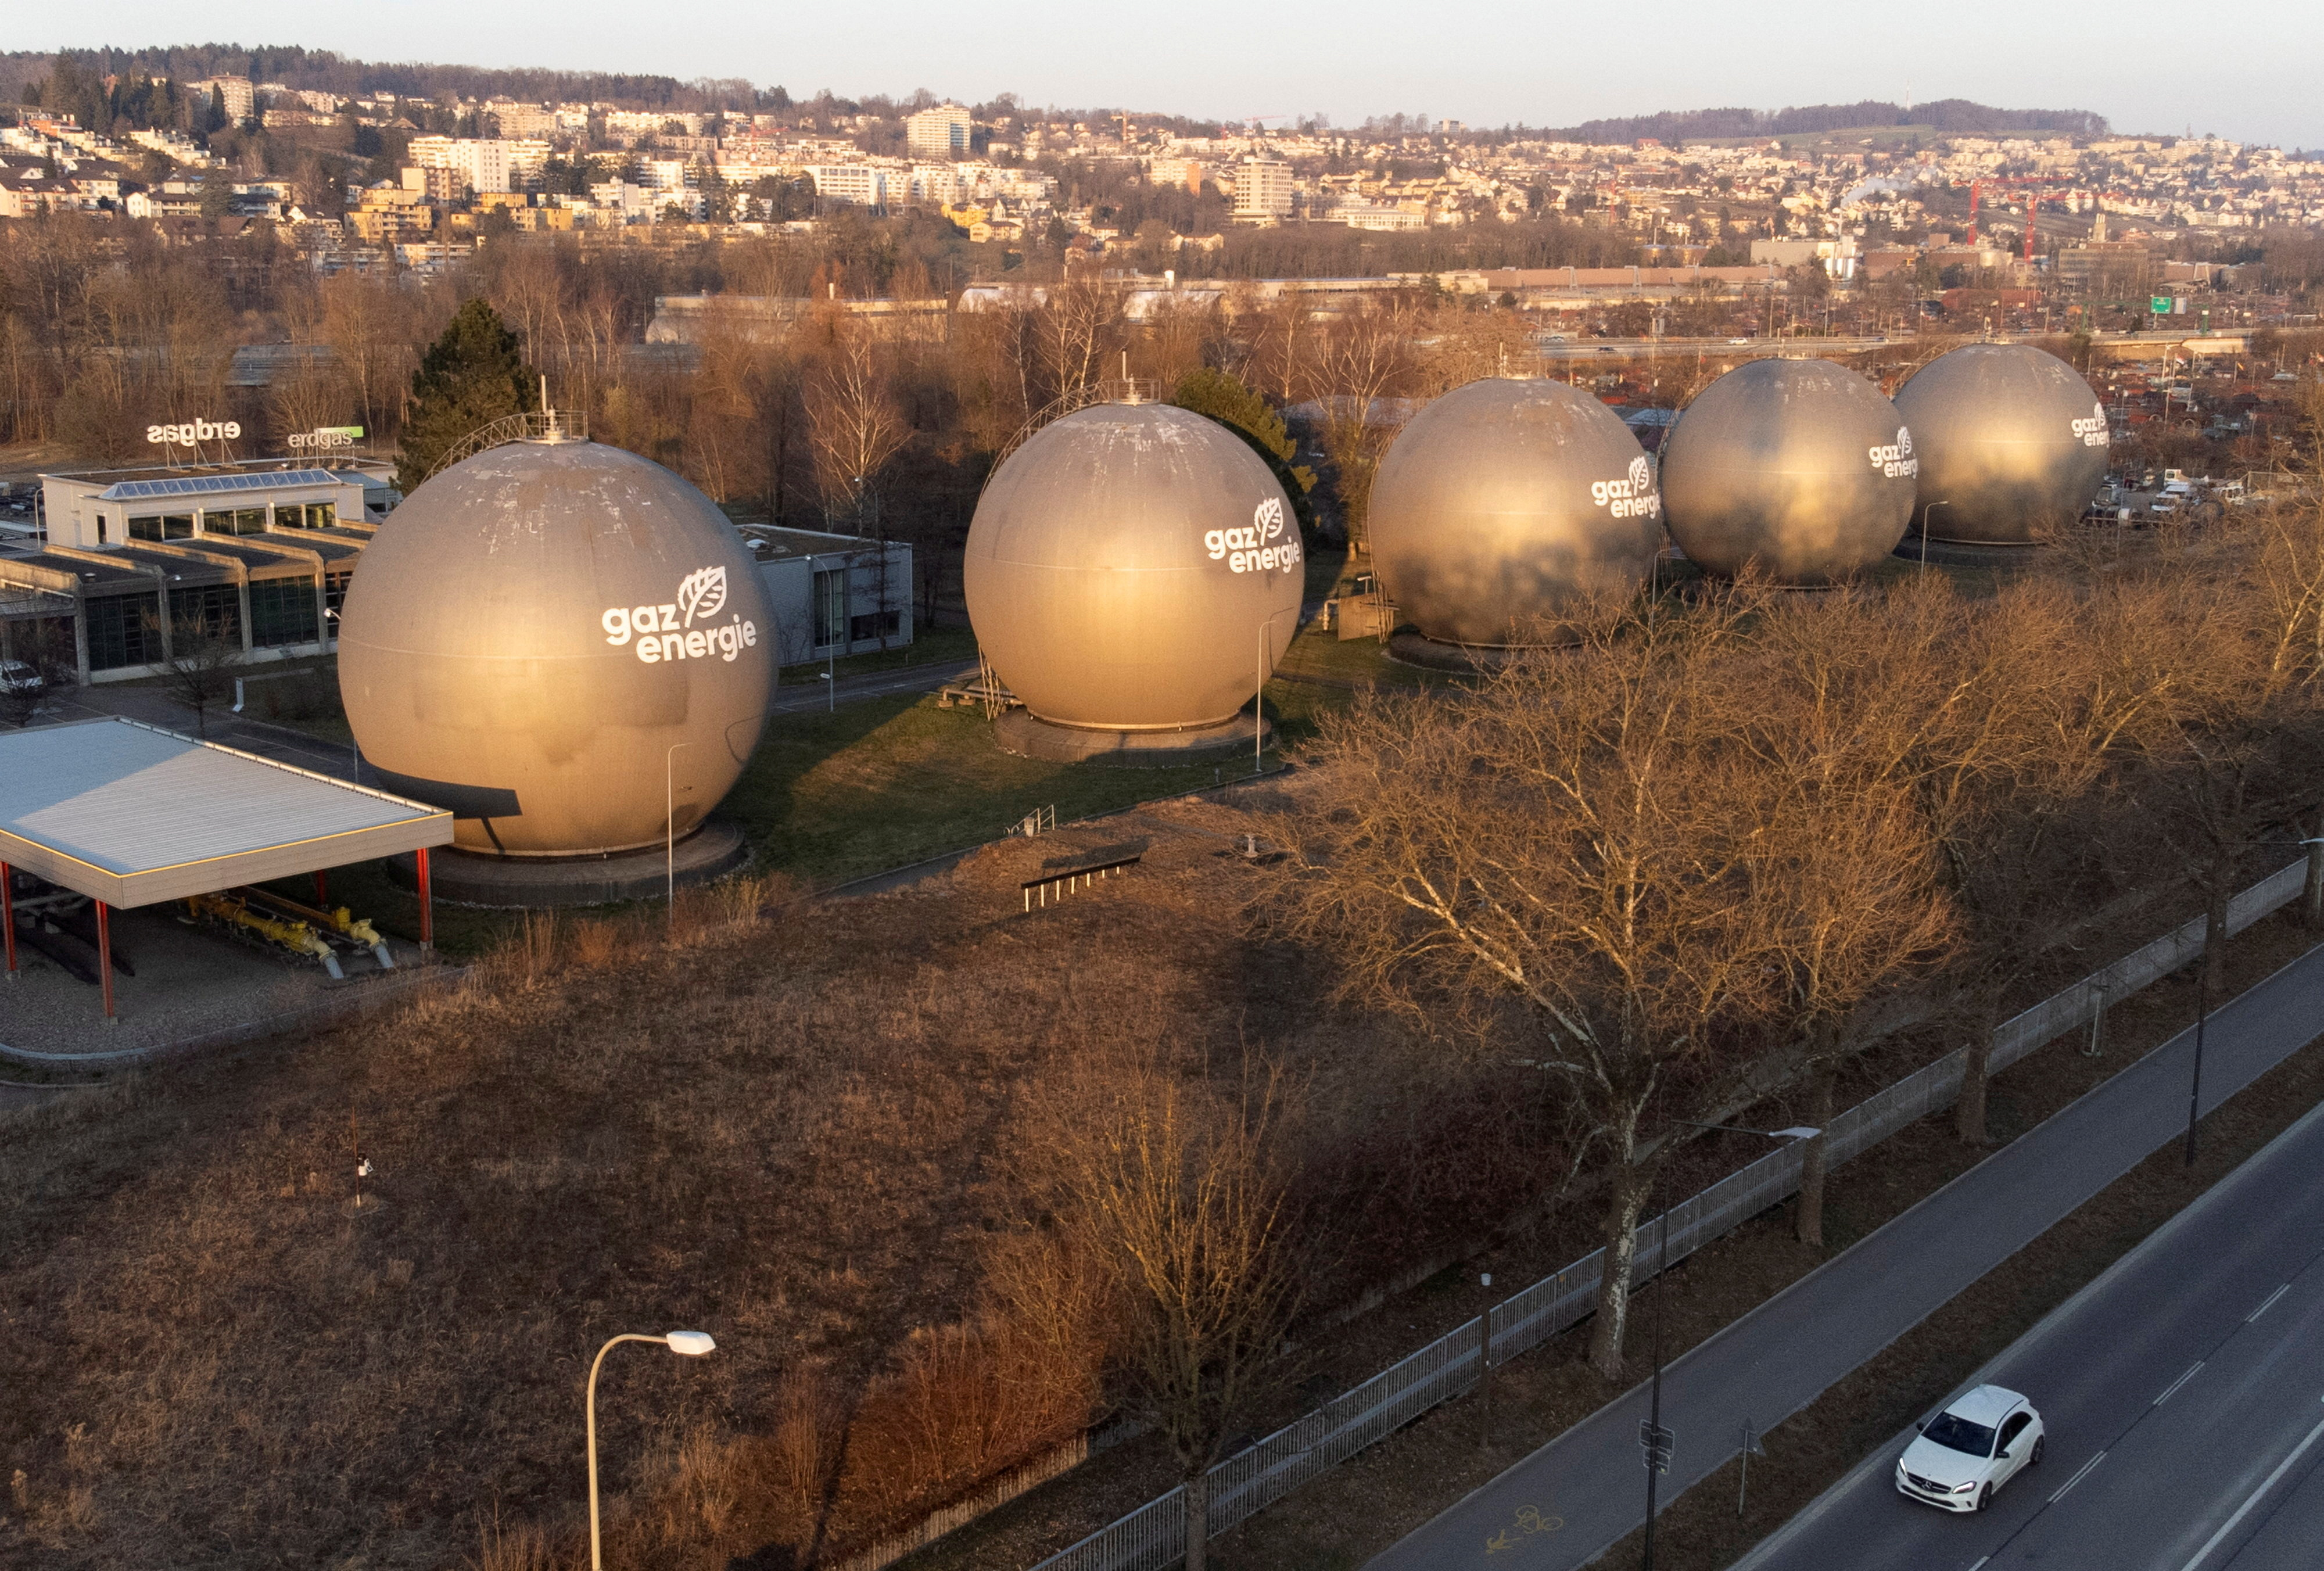 Tanks are seen at a storage facility of Erdgas Ostschweiz AG company in Schlieren